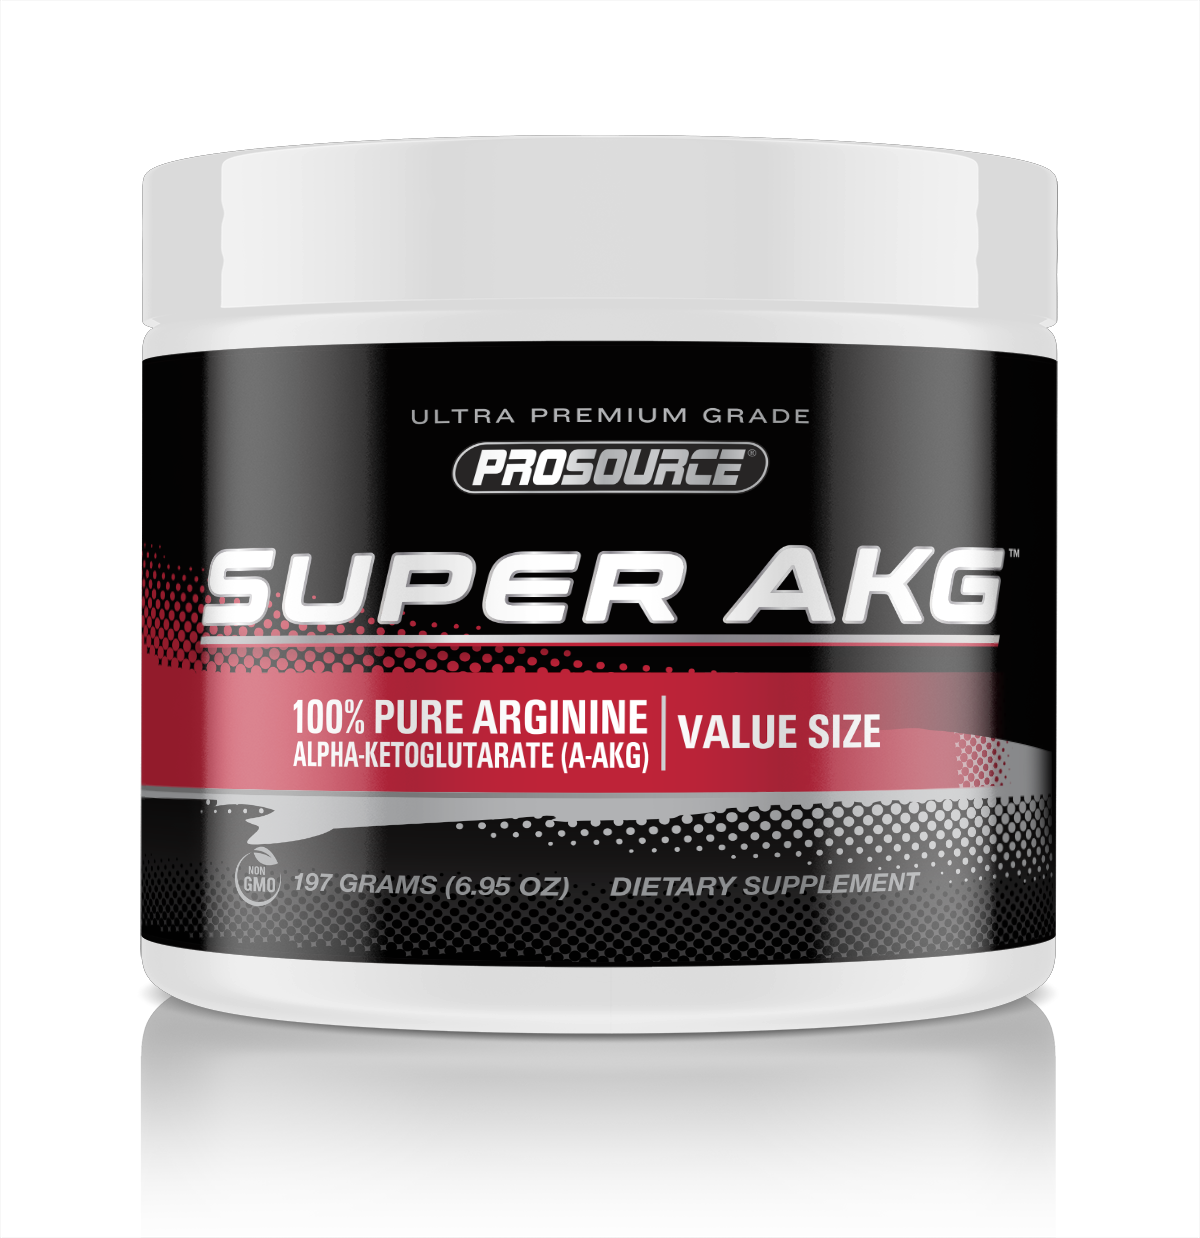 Super AKG Powder